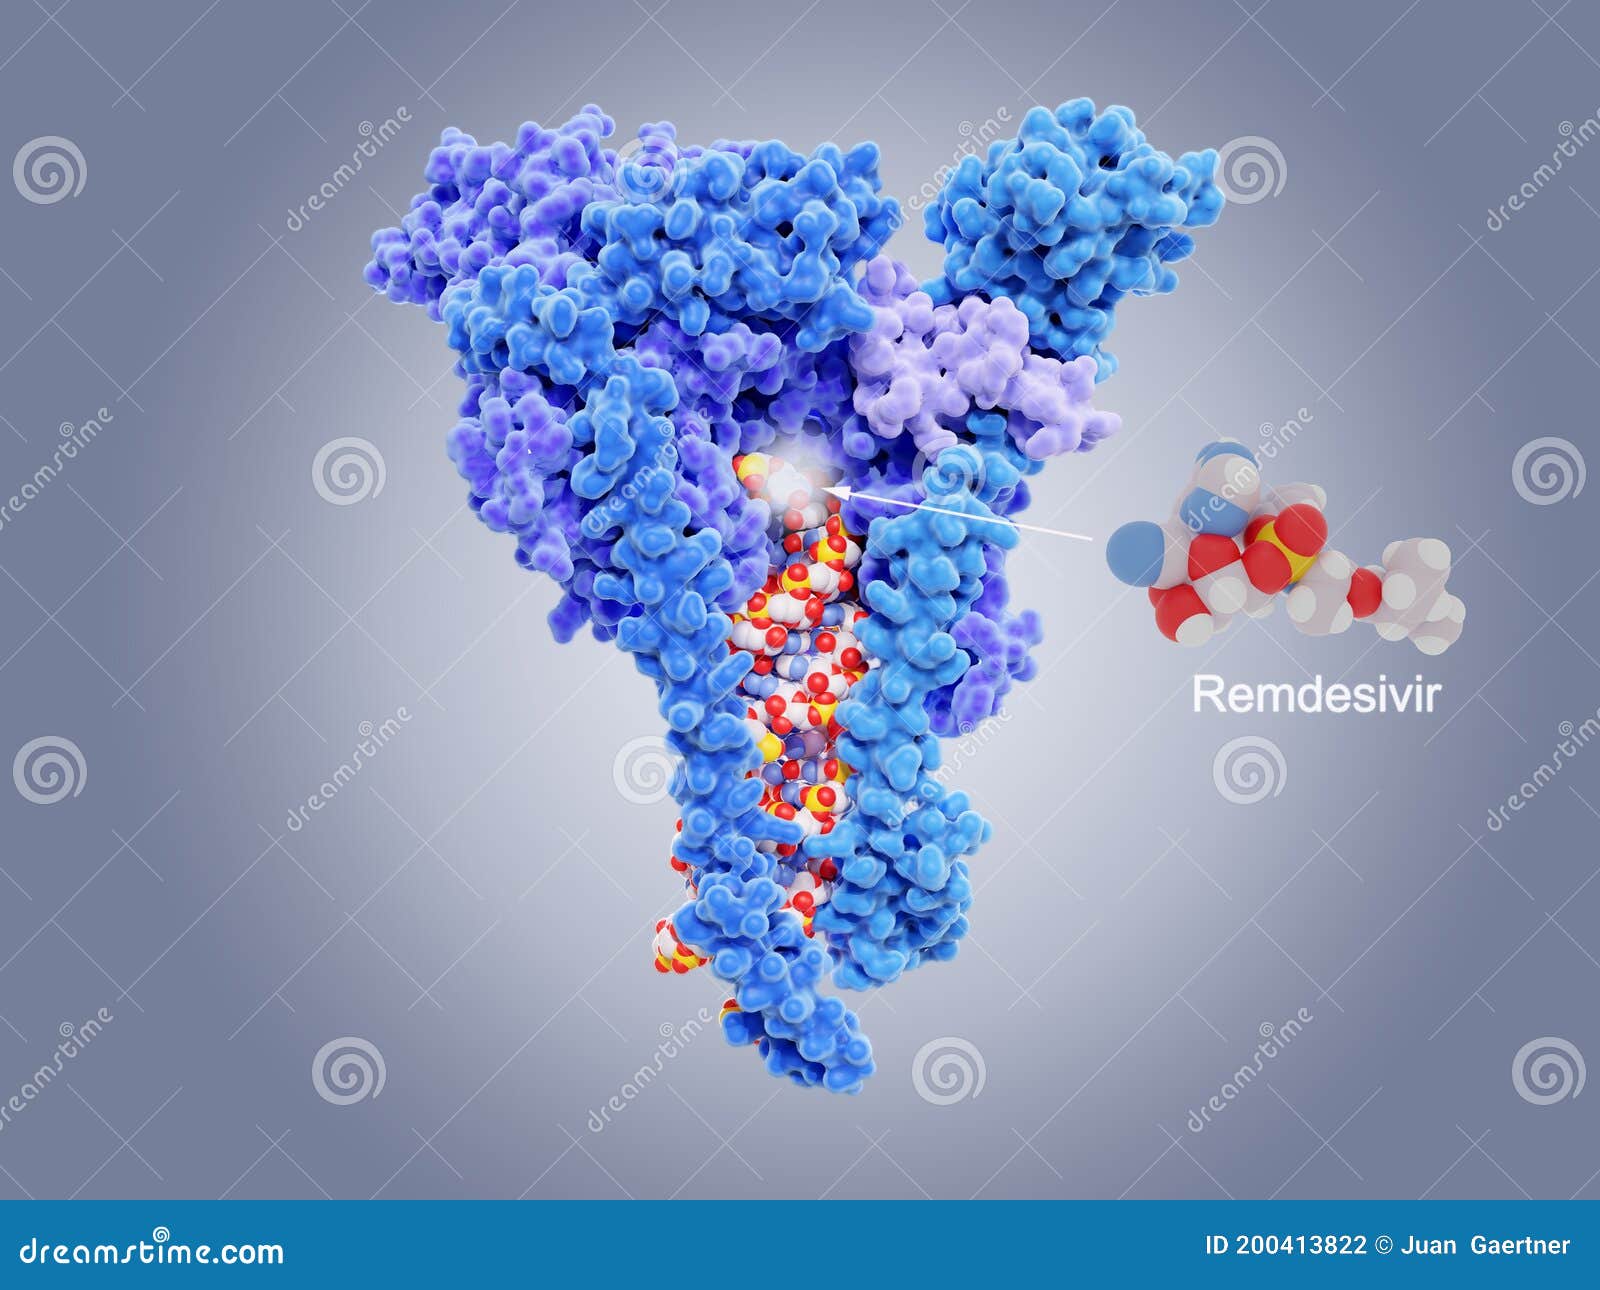 remdesivir inhibits the coronavirus rna dependent rna polymerase rdrp